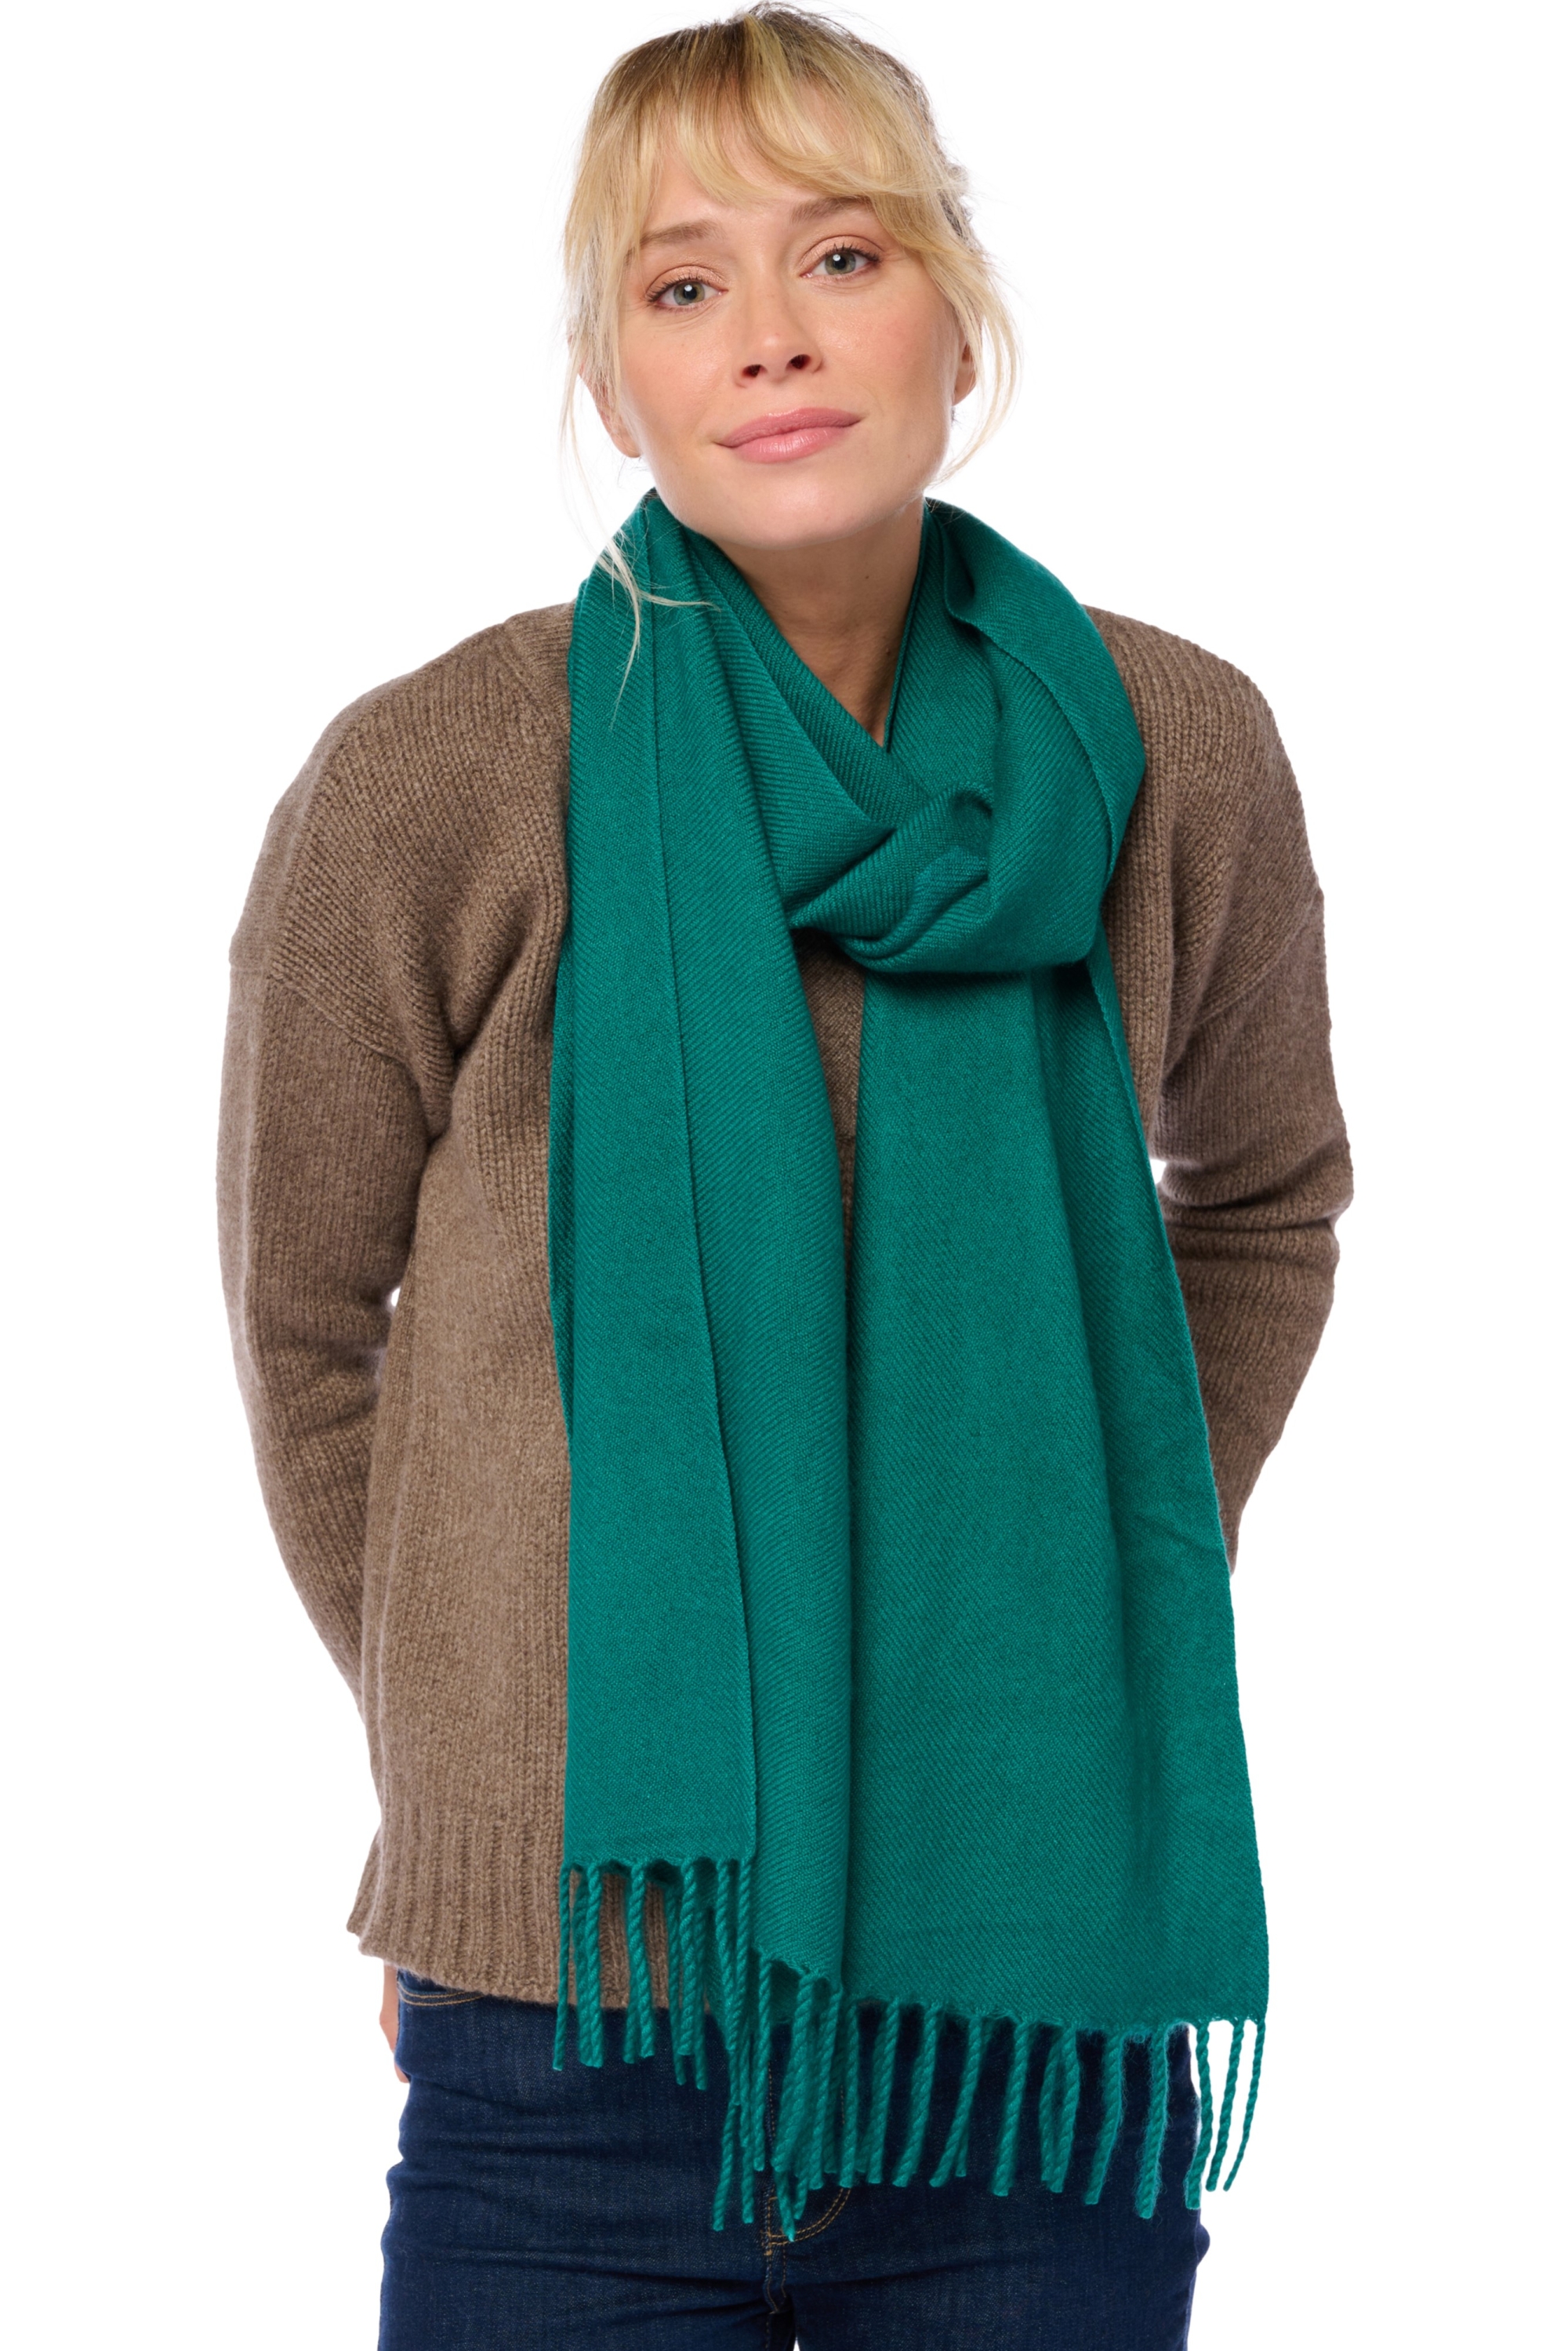 Cashmere accessories scarf mufflers kazu200 forest green 200 x 35 cm